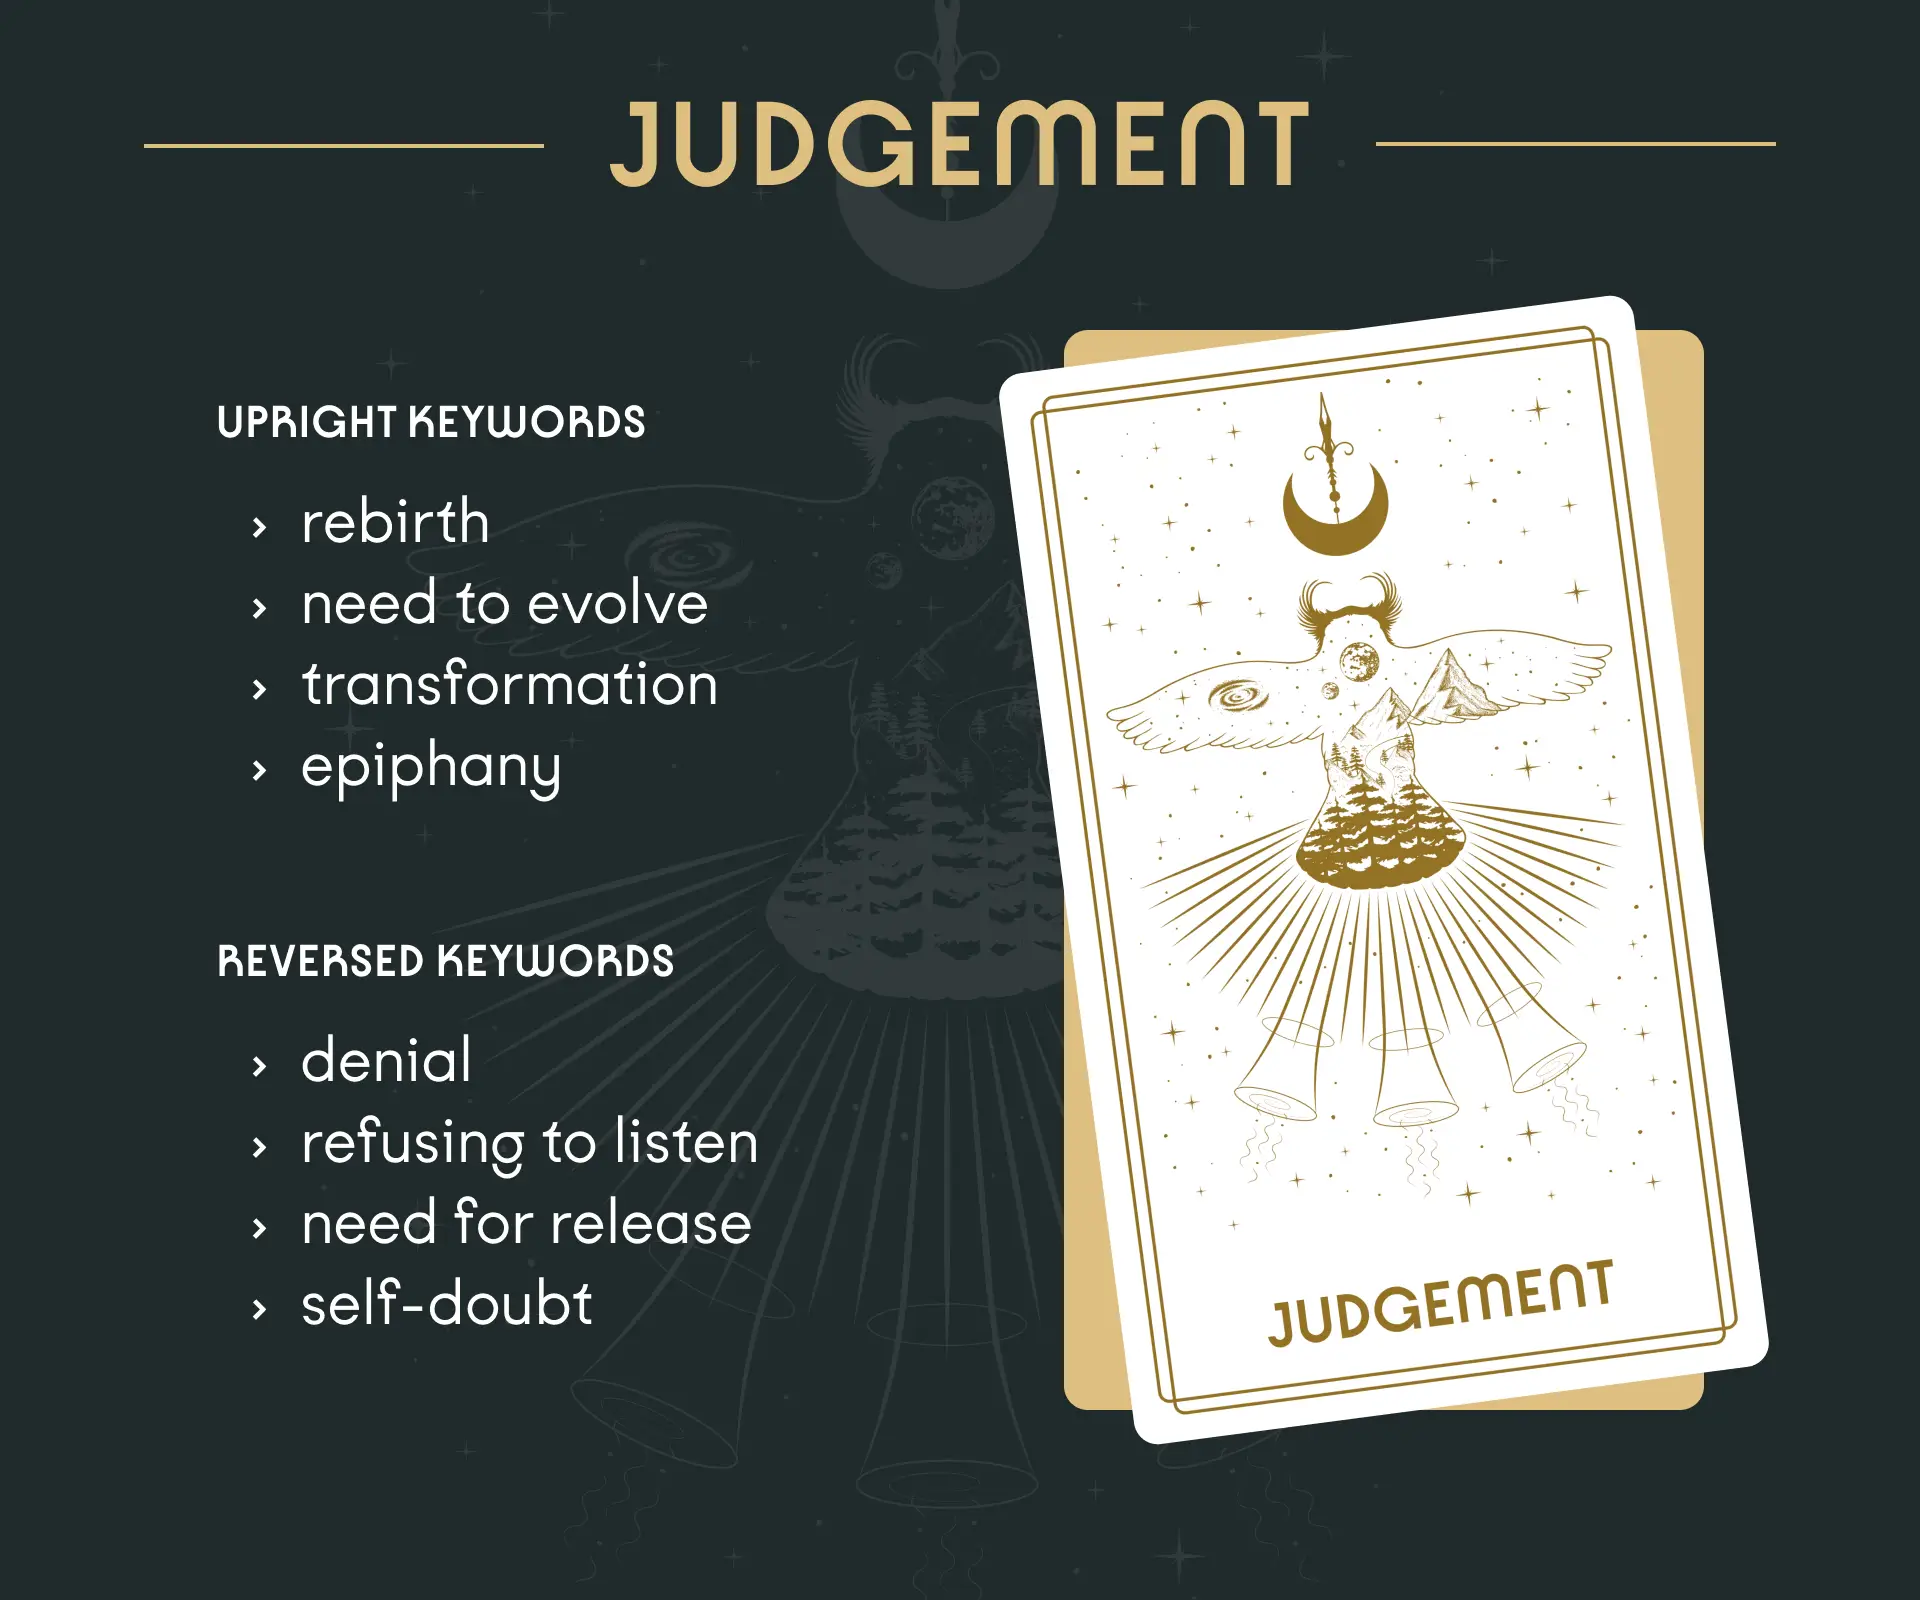 Judgement Tarot Card Upright and Reversed Keywords